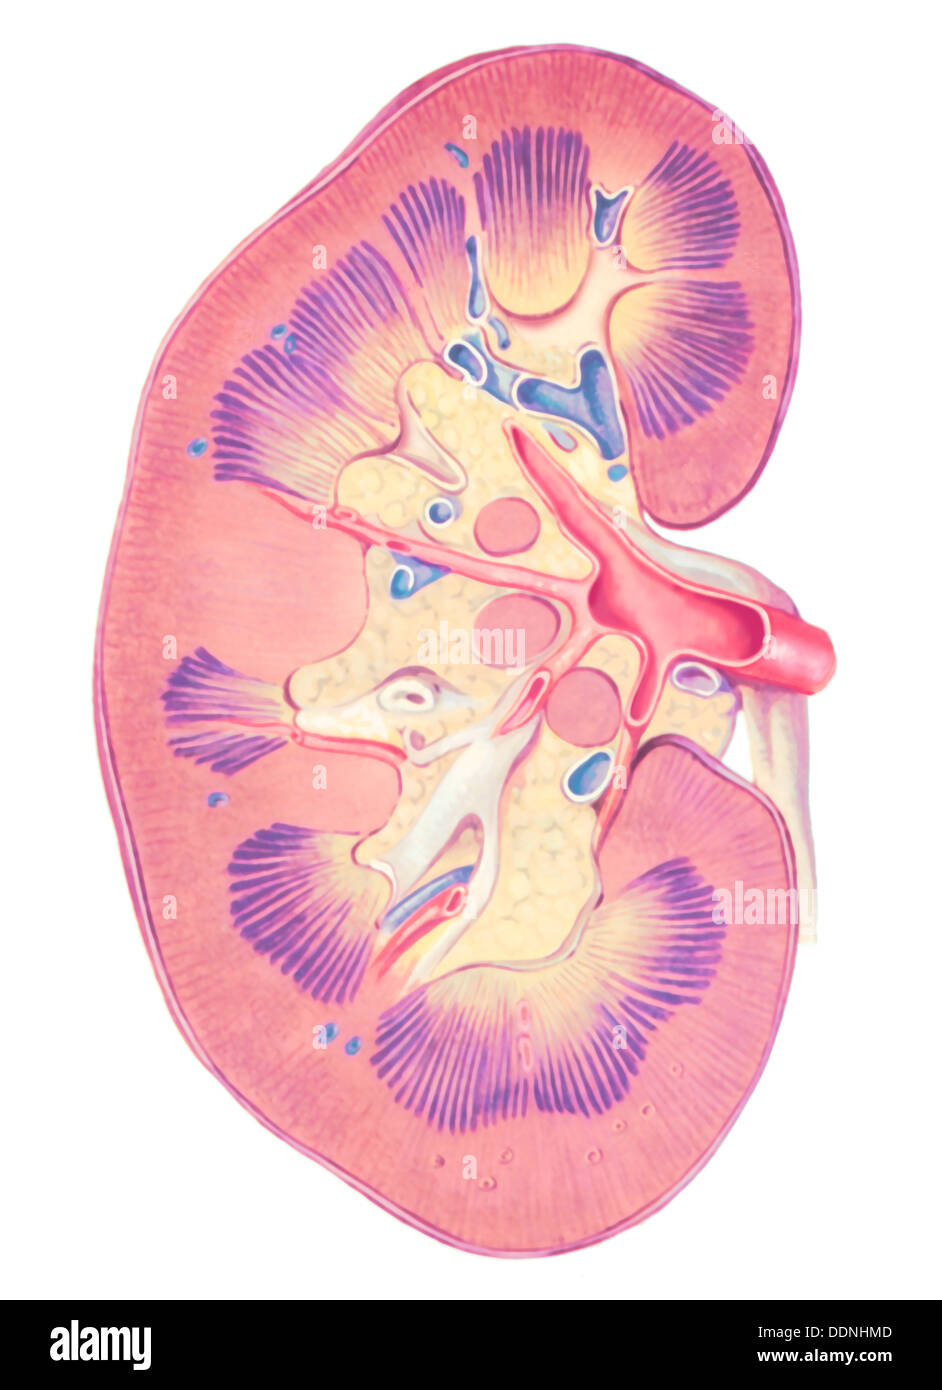 Kidney Diagram Unlabeled - Human Body Anatomy